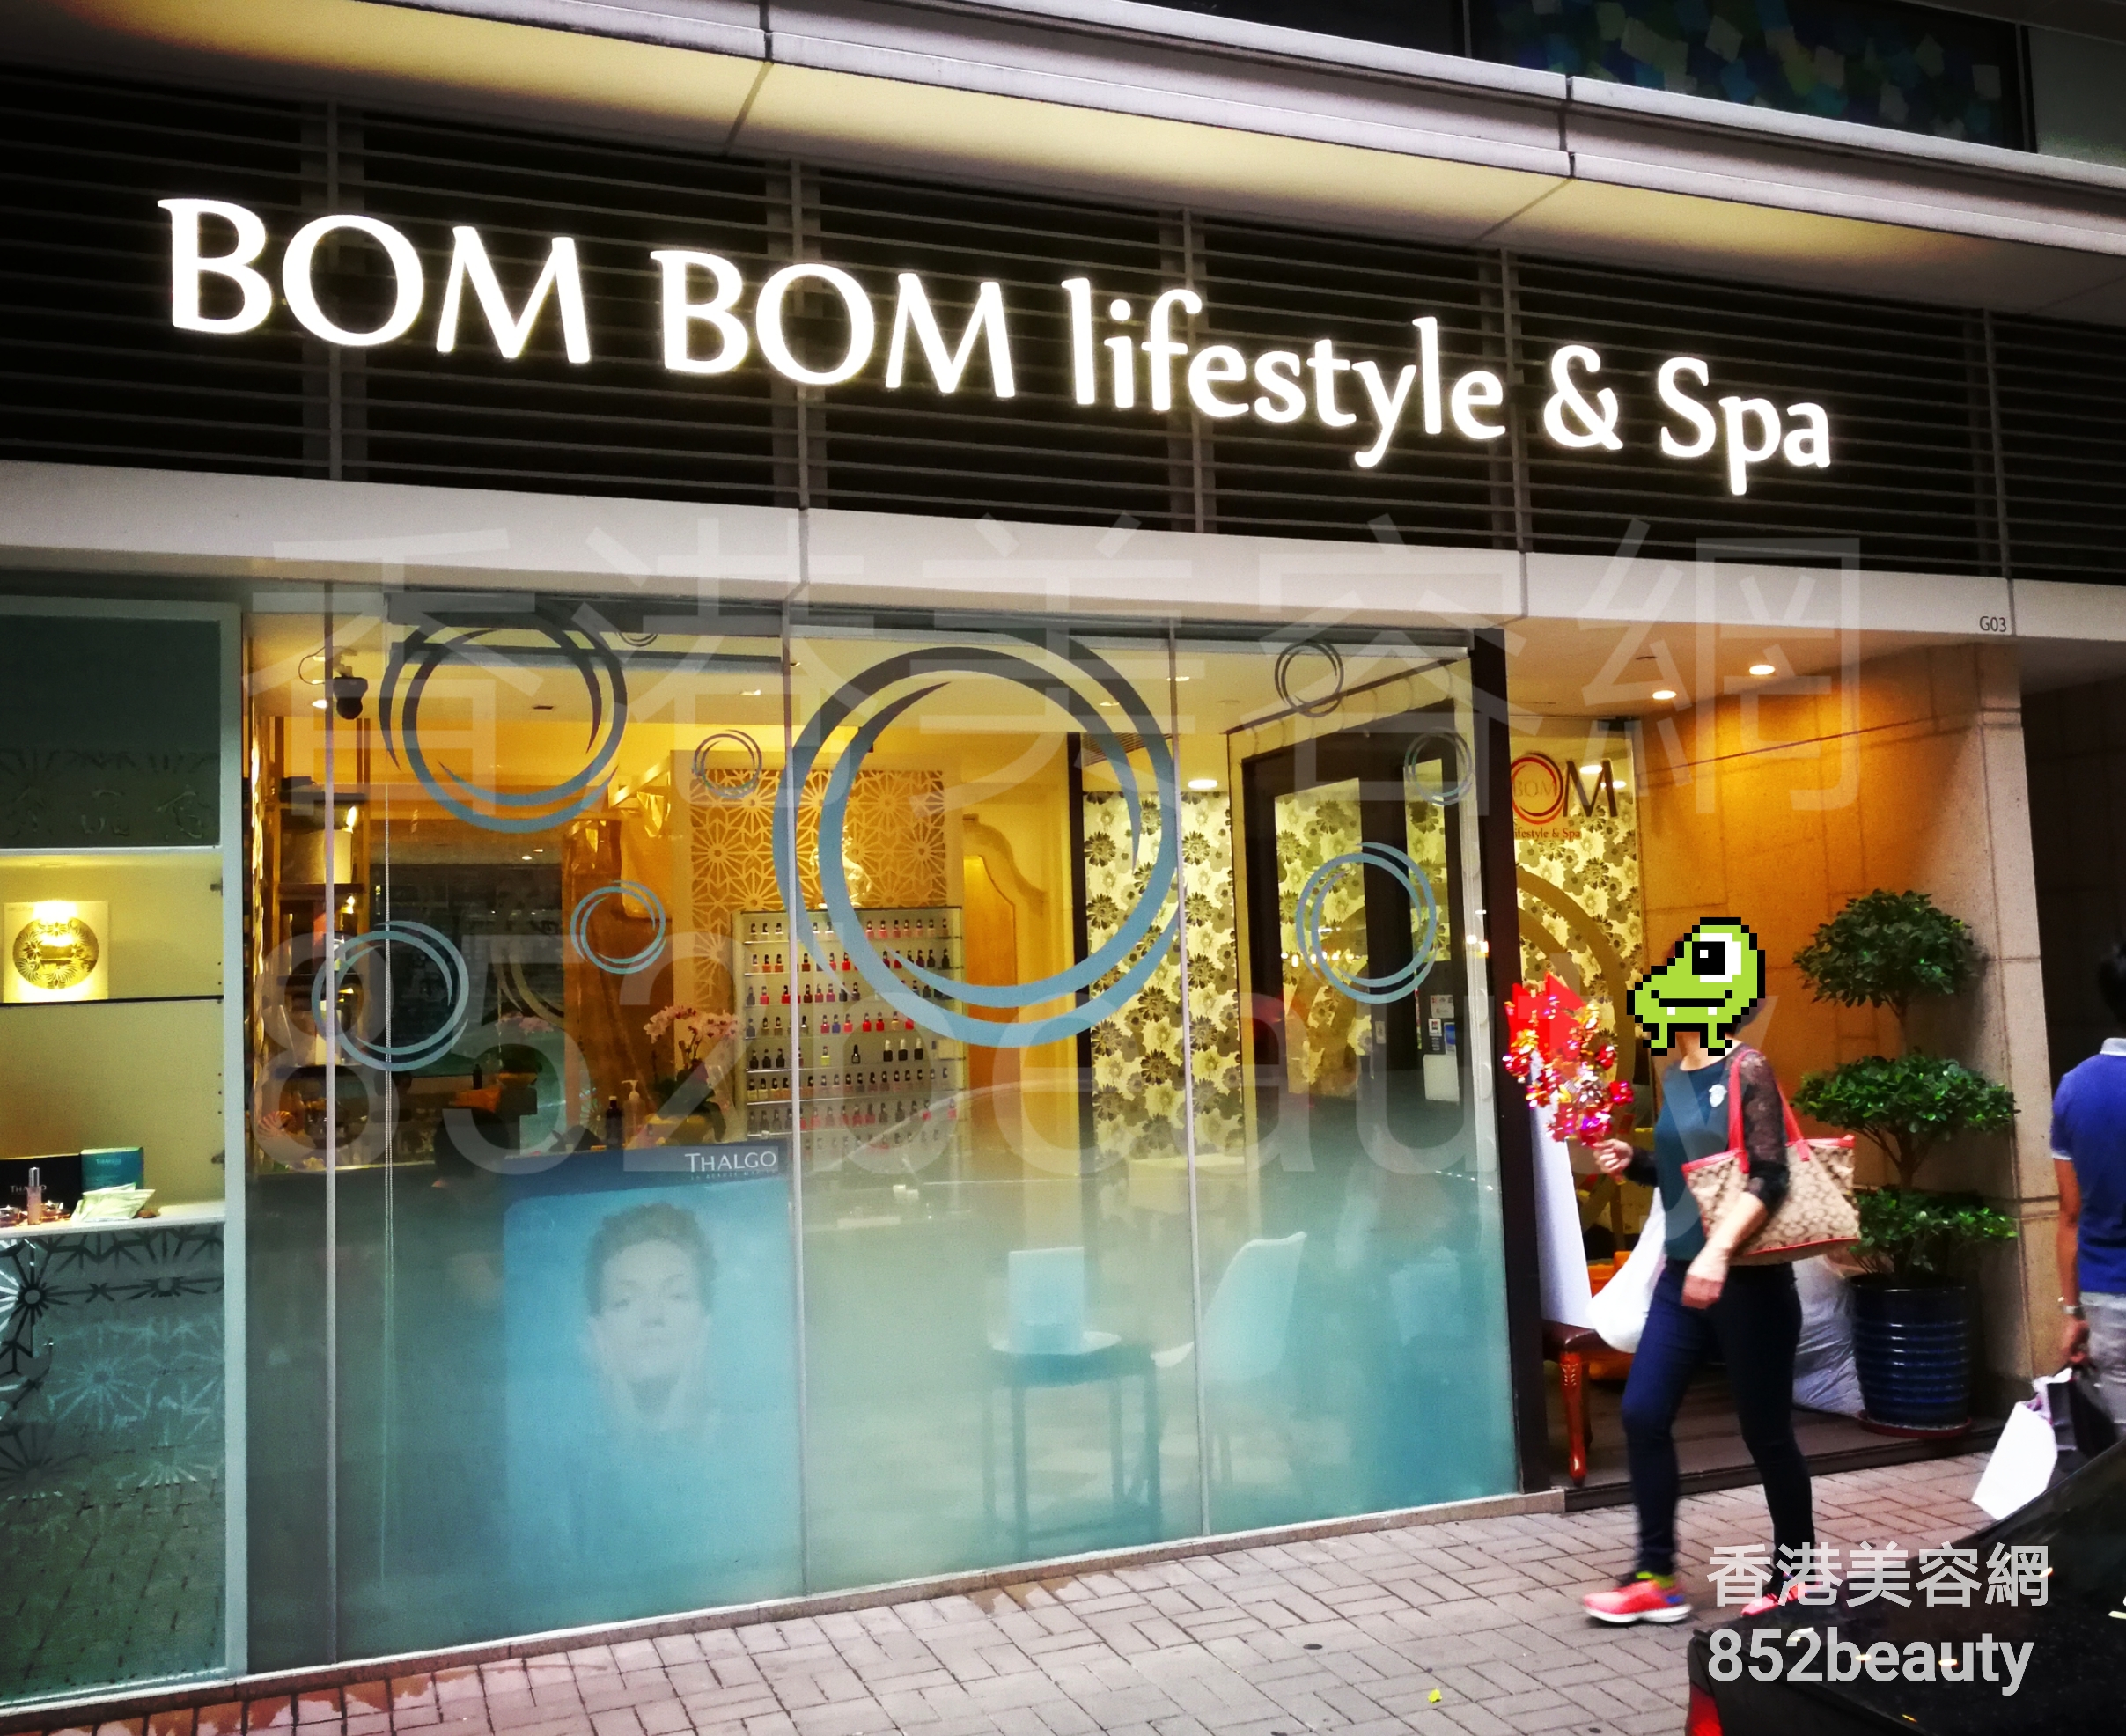 香港美容網 Hong Kong Beauty Salon 美容院 / 美容師: BOM BOM lifestyle & Spa